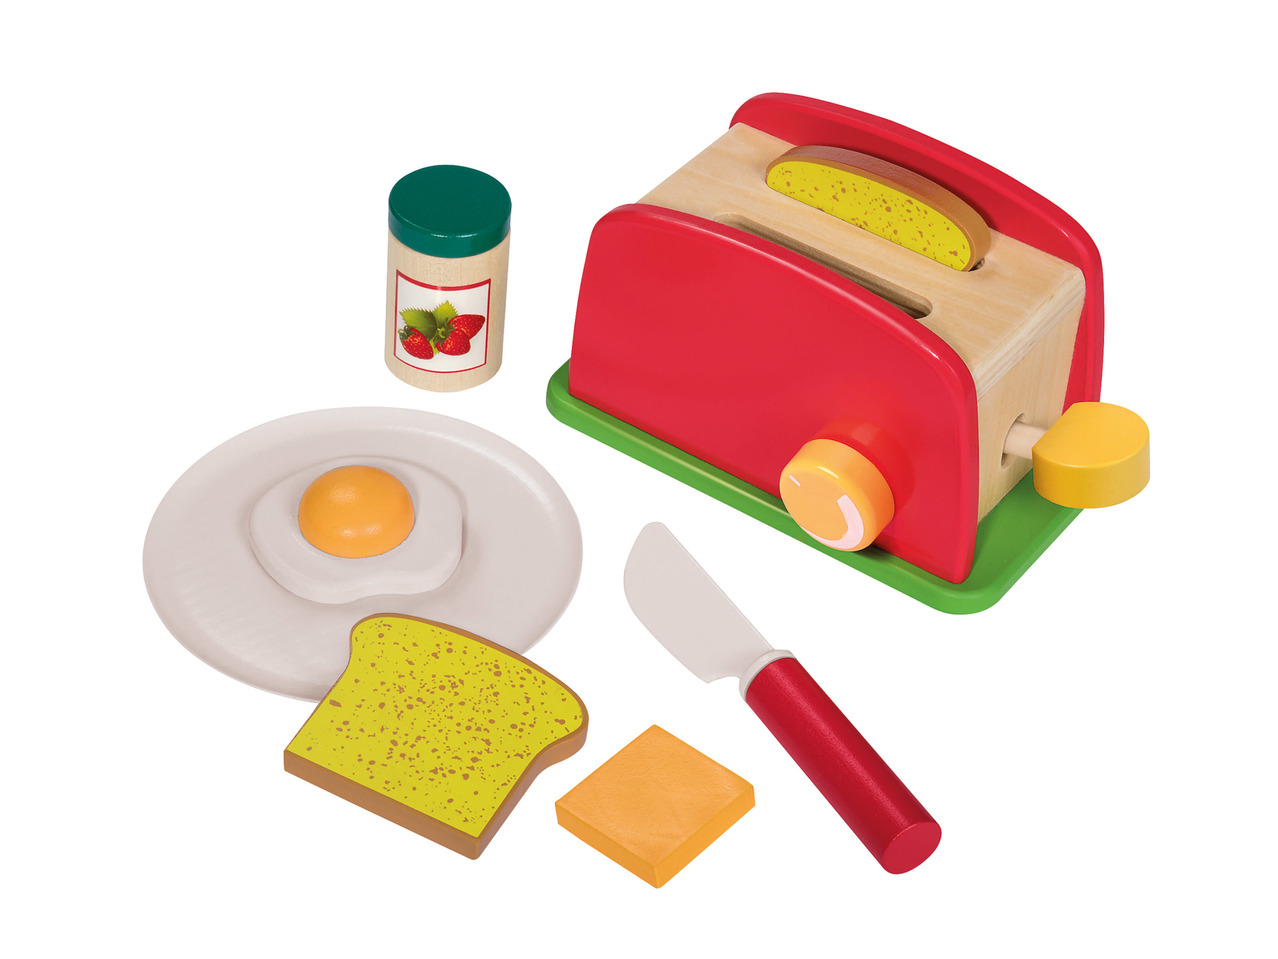 Playtive Junior Wooden Cookware Sets1